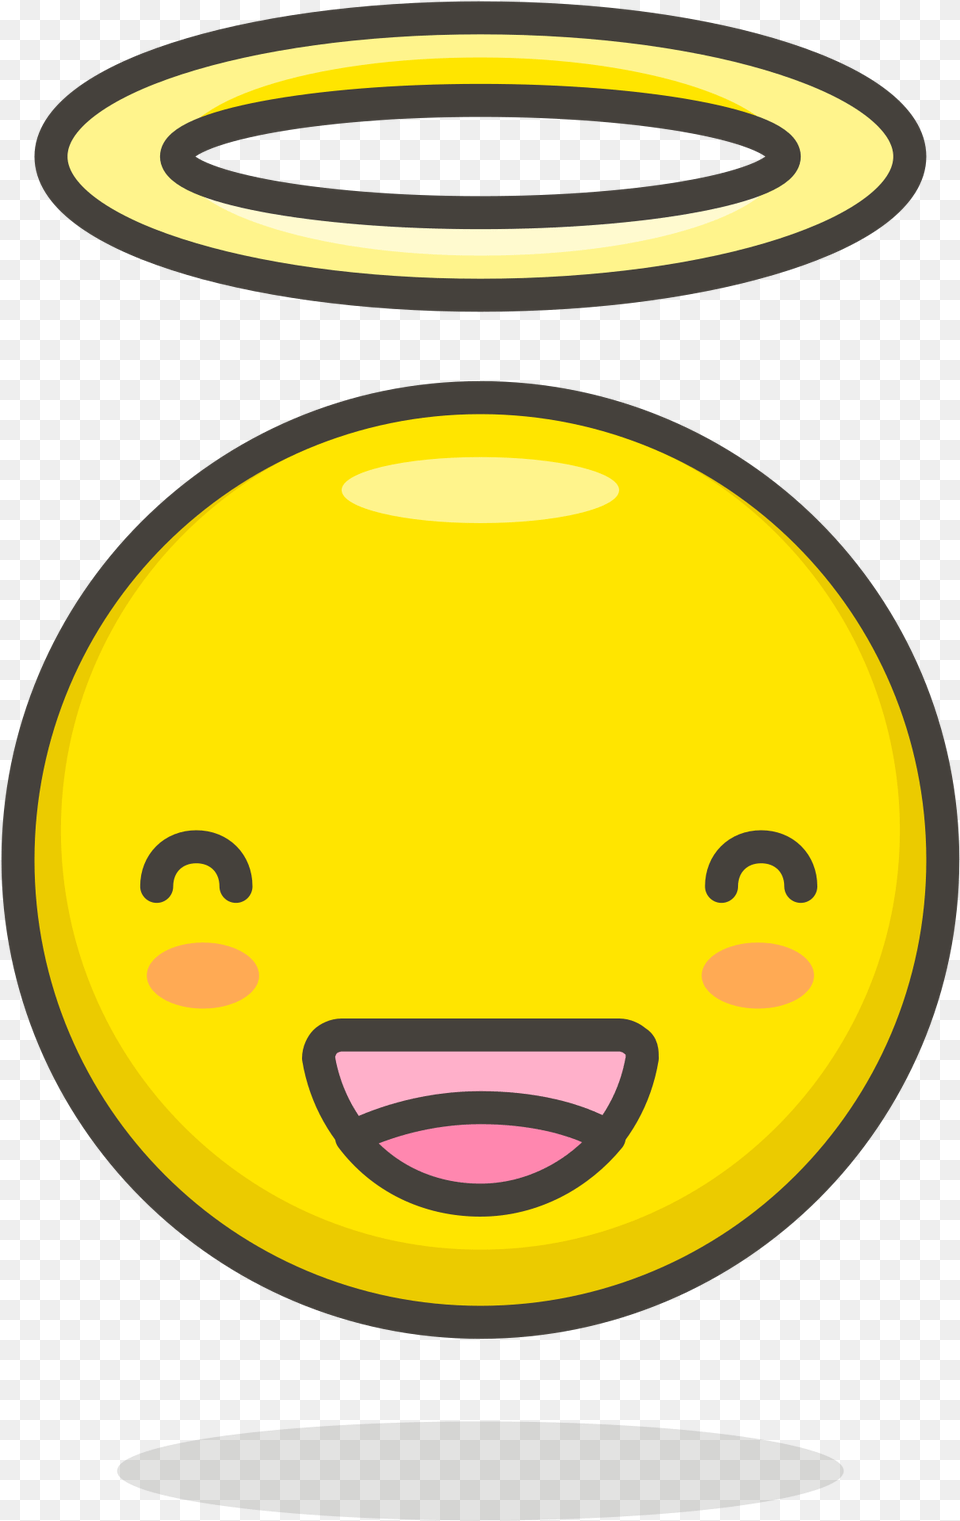 Clip Art Transparent File Smiling Face With Pbs Kids Go, Sphere, Jar, Disk Png